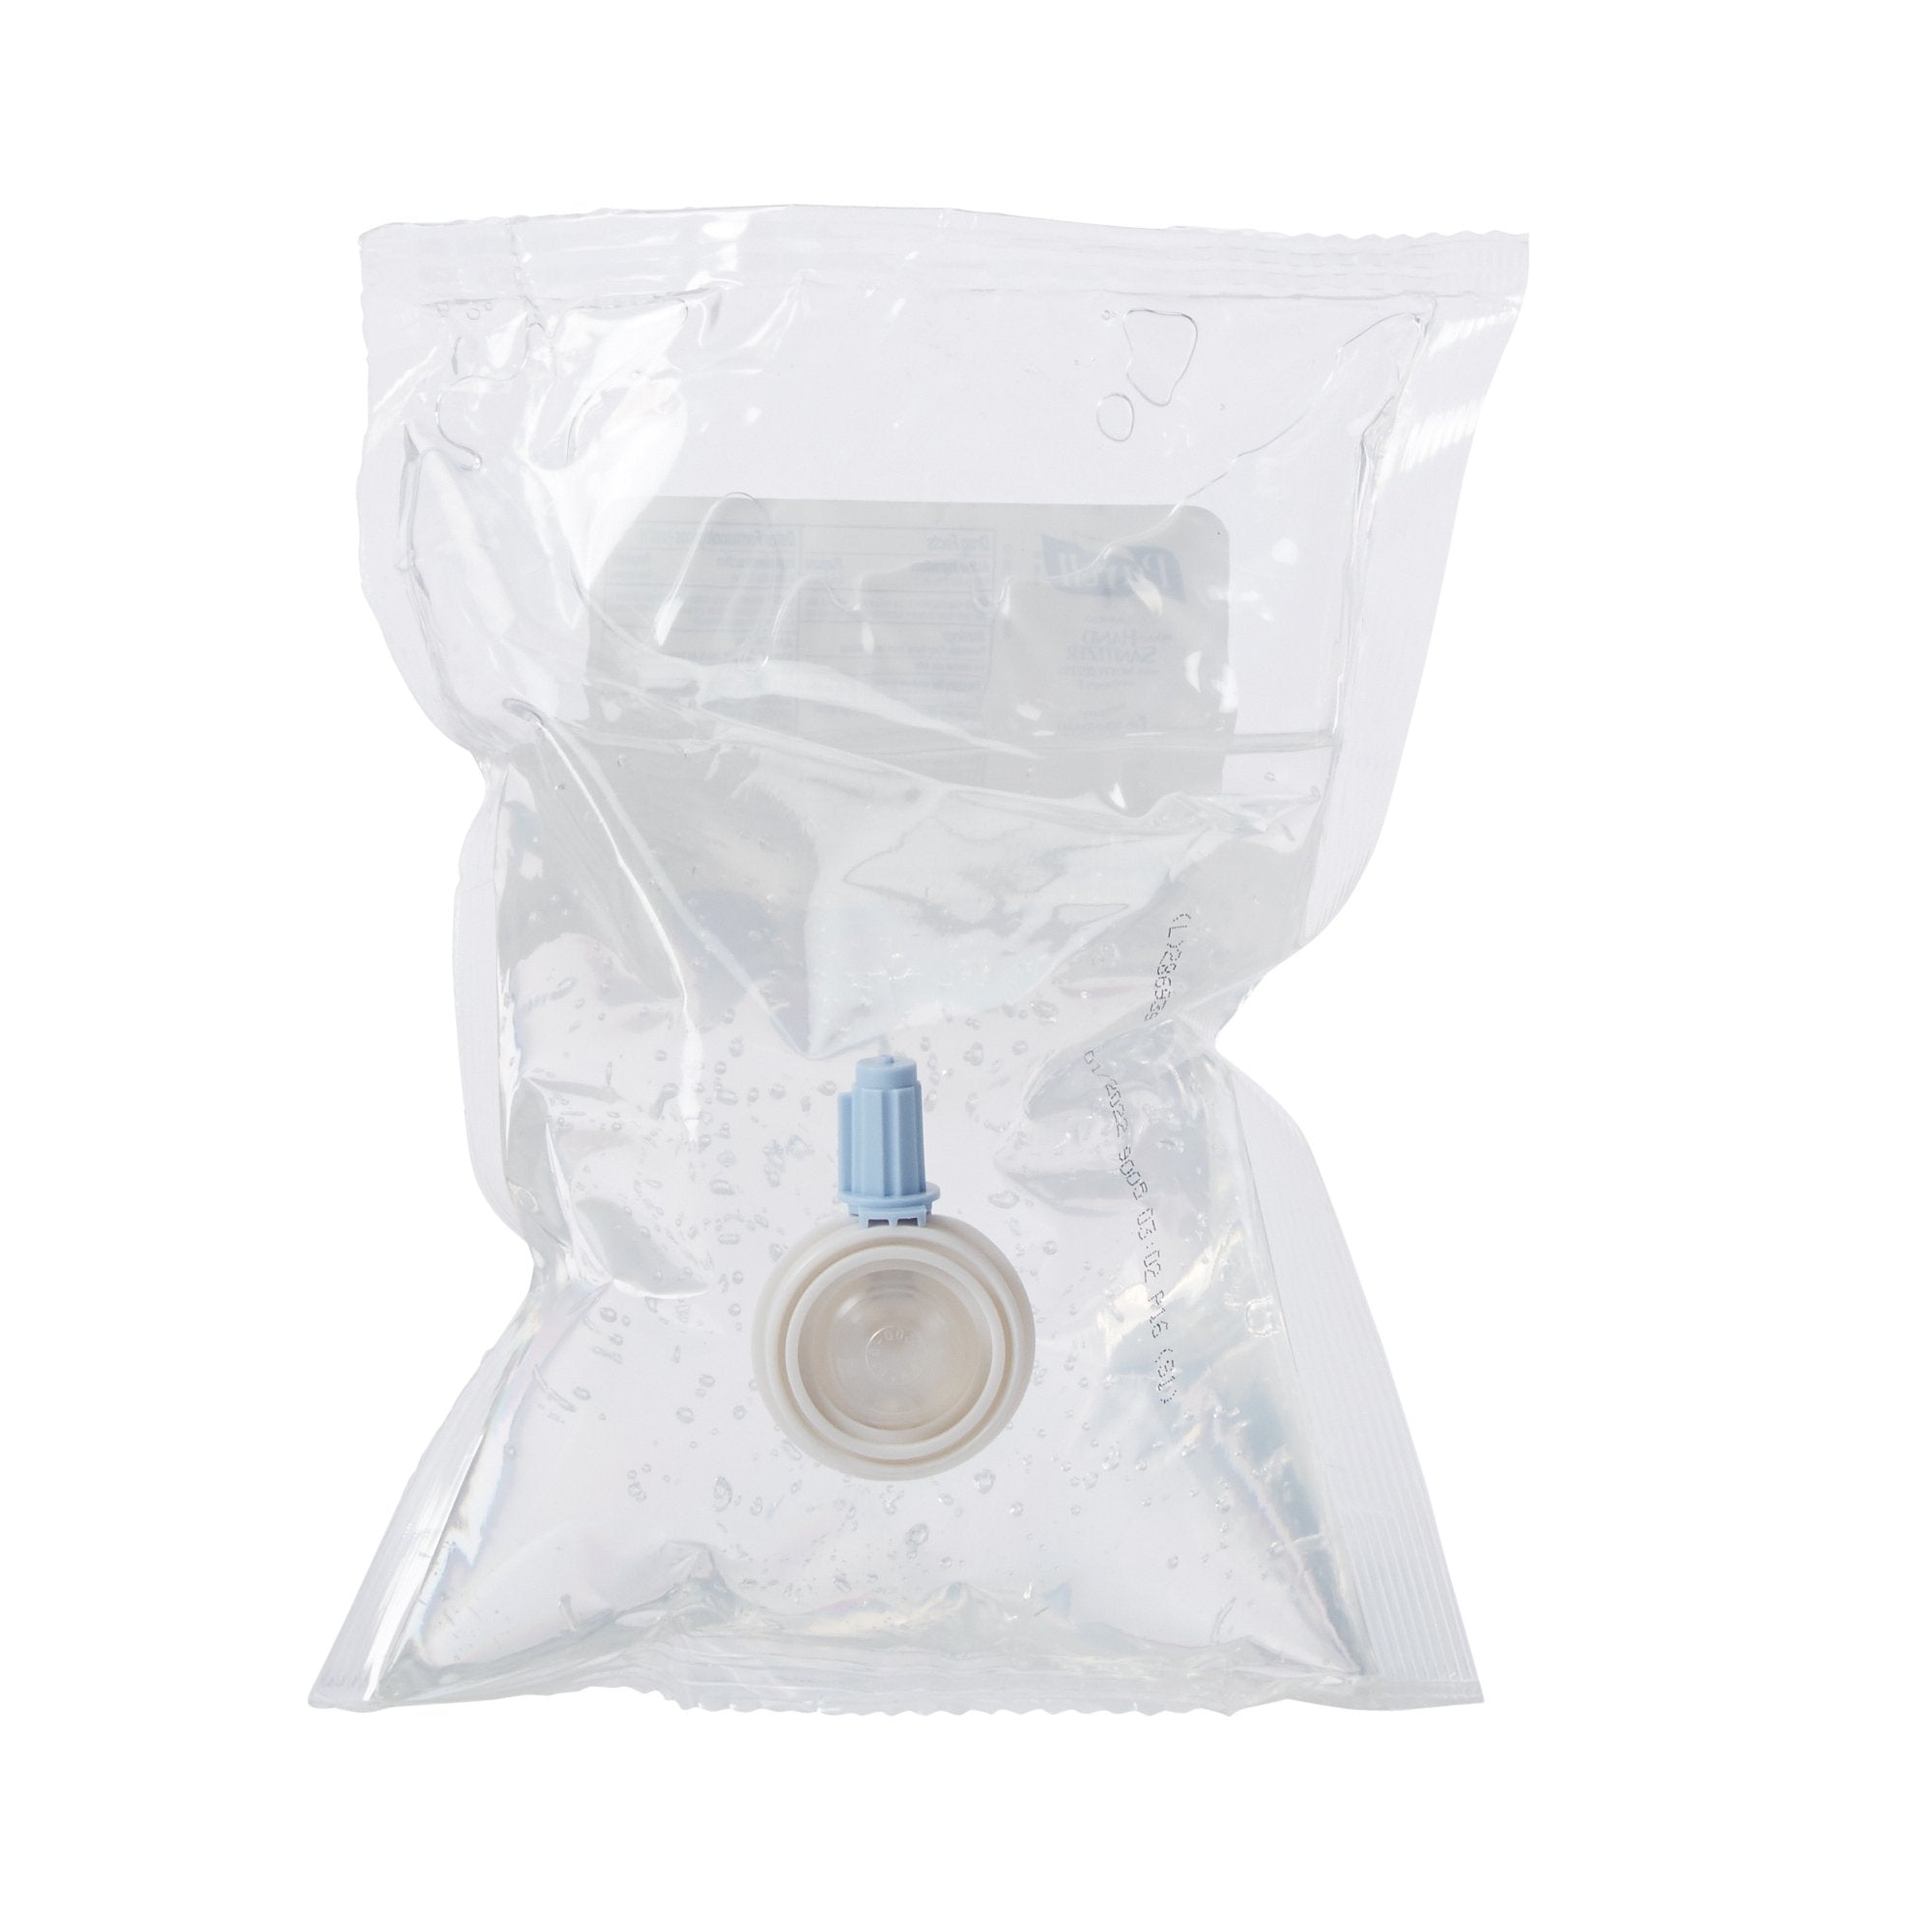 Hand Sanitizer Purell Advanced 1,000 mL Ethyl Alcohol Gel Dispenser Refill Bag